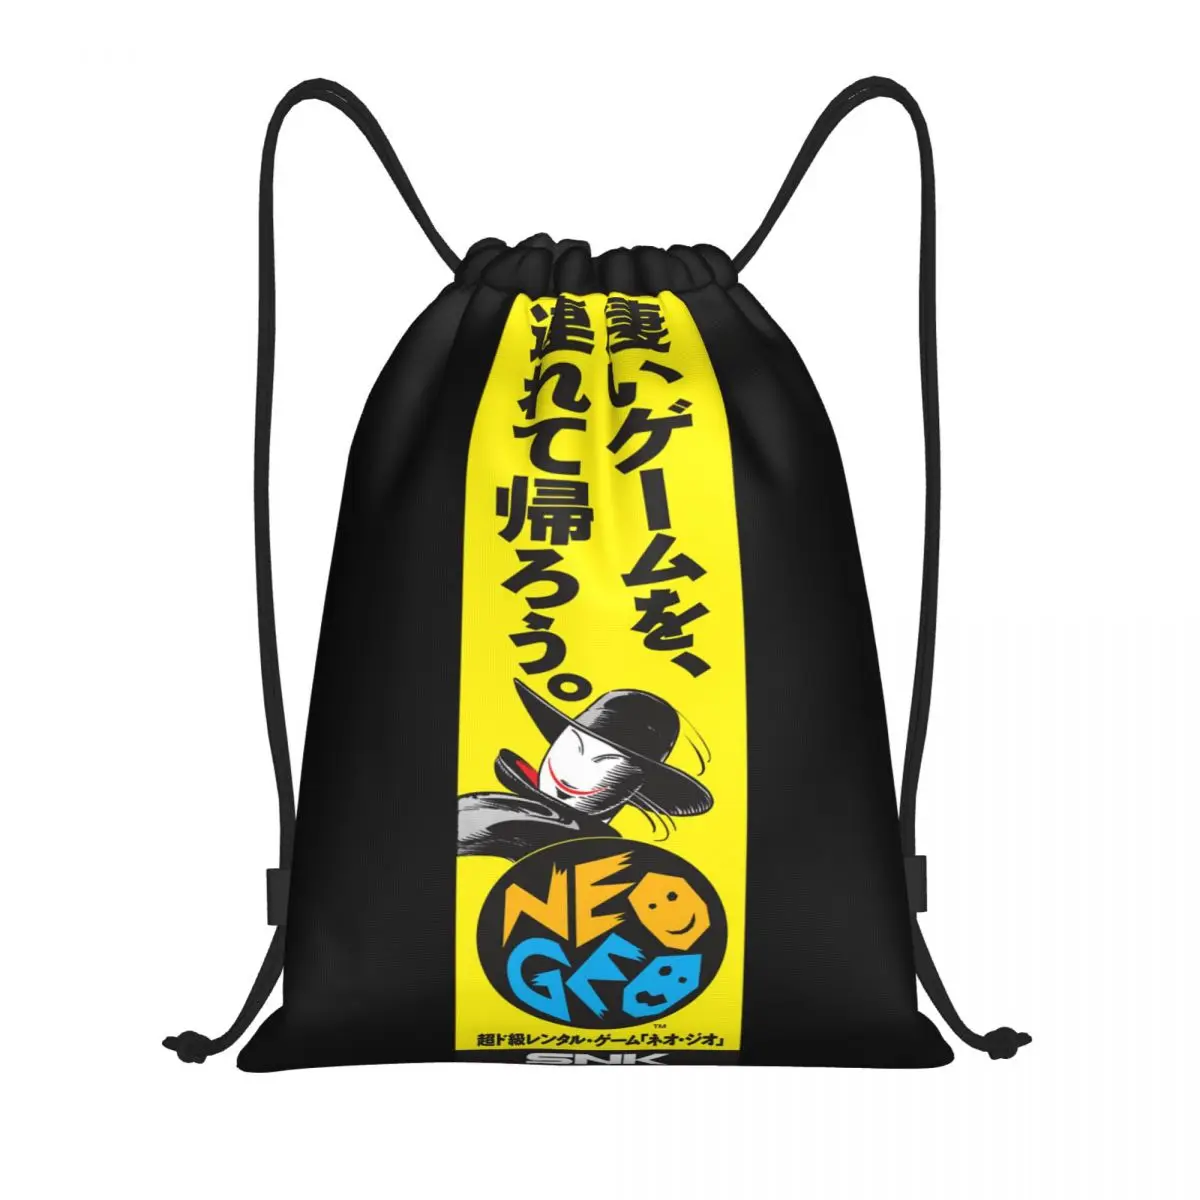 

Сумки на шнурке, сумка для спортзала Neo Geo 6 Travel Повседневный Рюкзак с графическим рисунком забавная Новинка